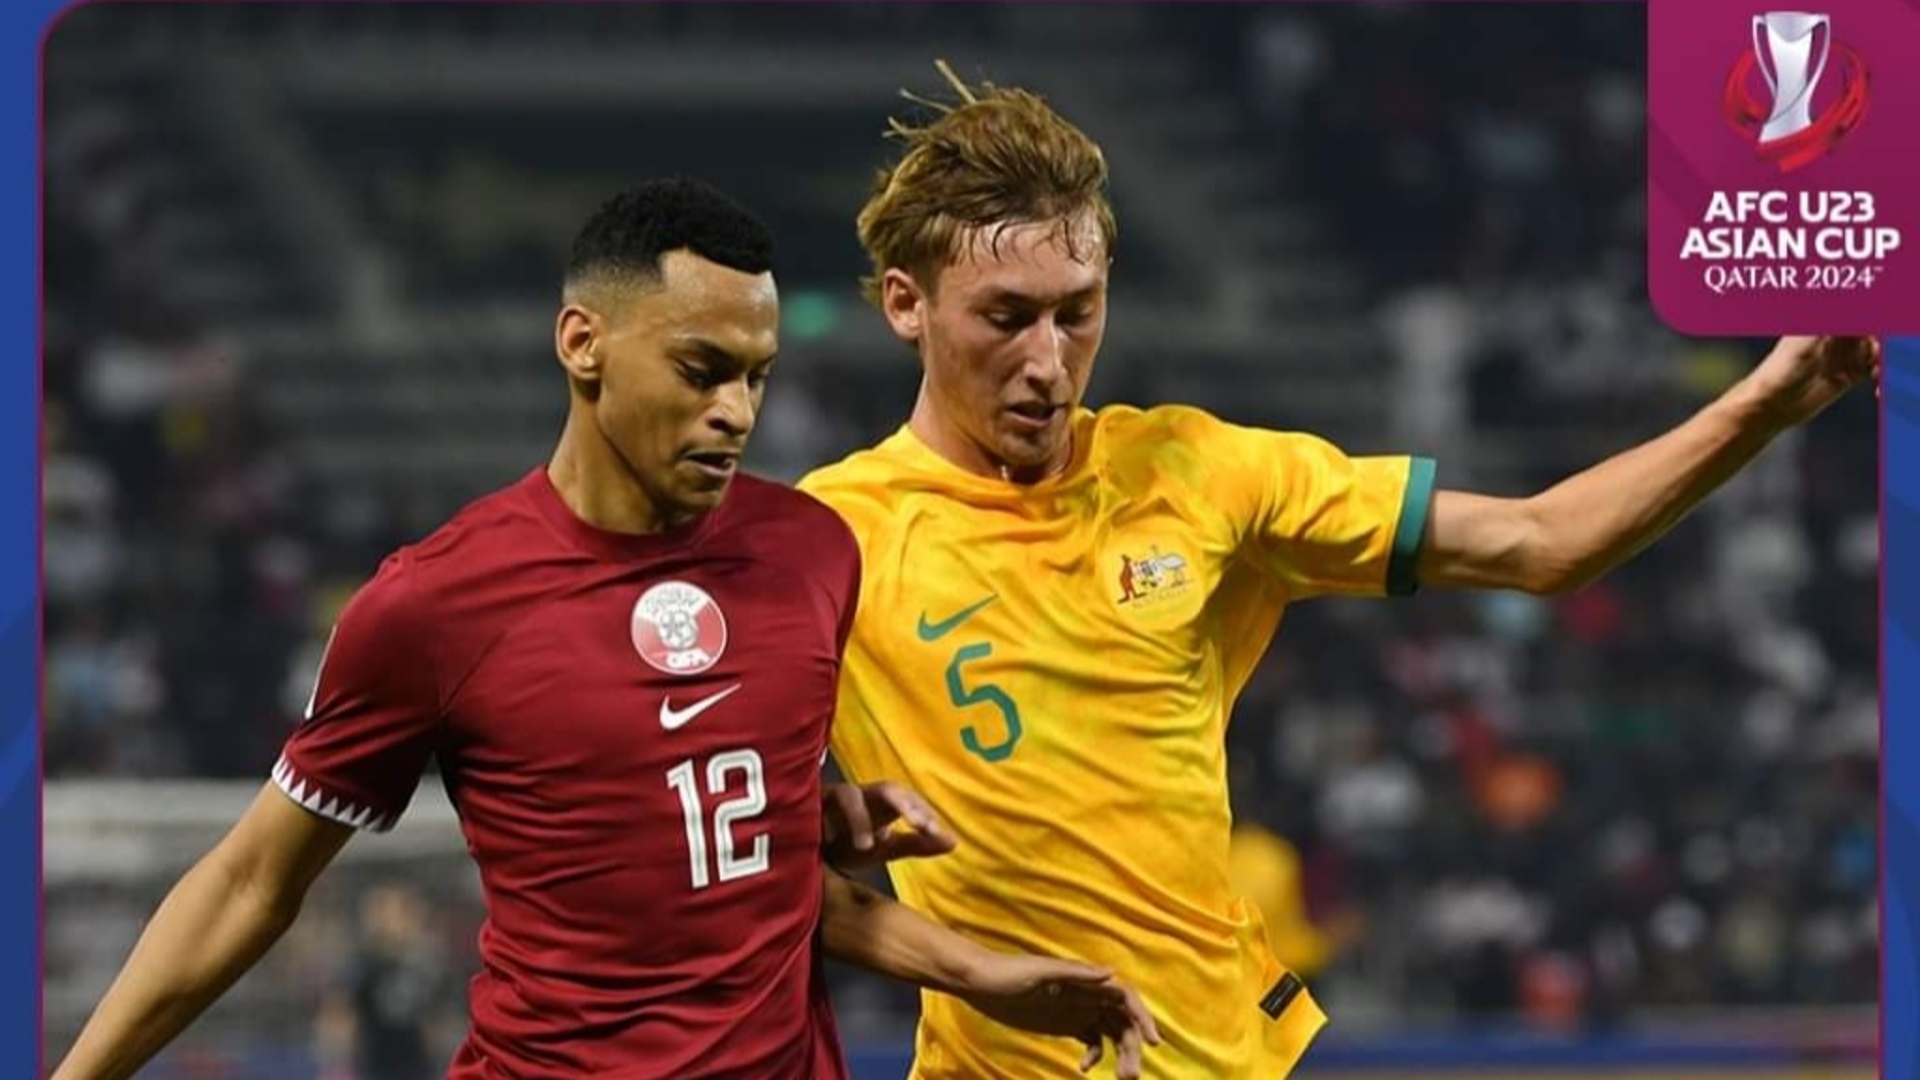 AFC U-23 Asian Cup: Australia Pulang Awal Setelah Gagal Tundukkan Qatar